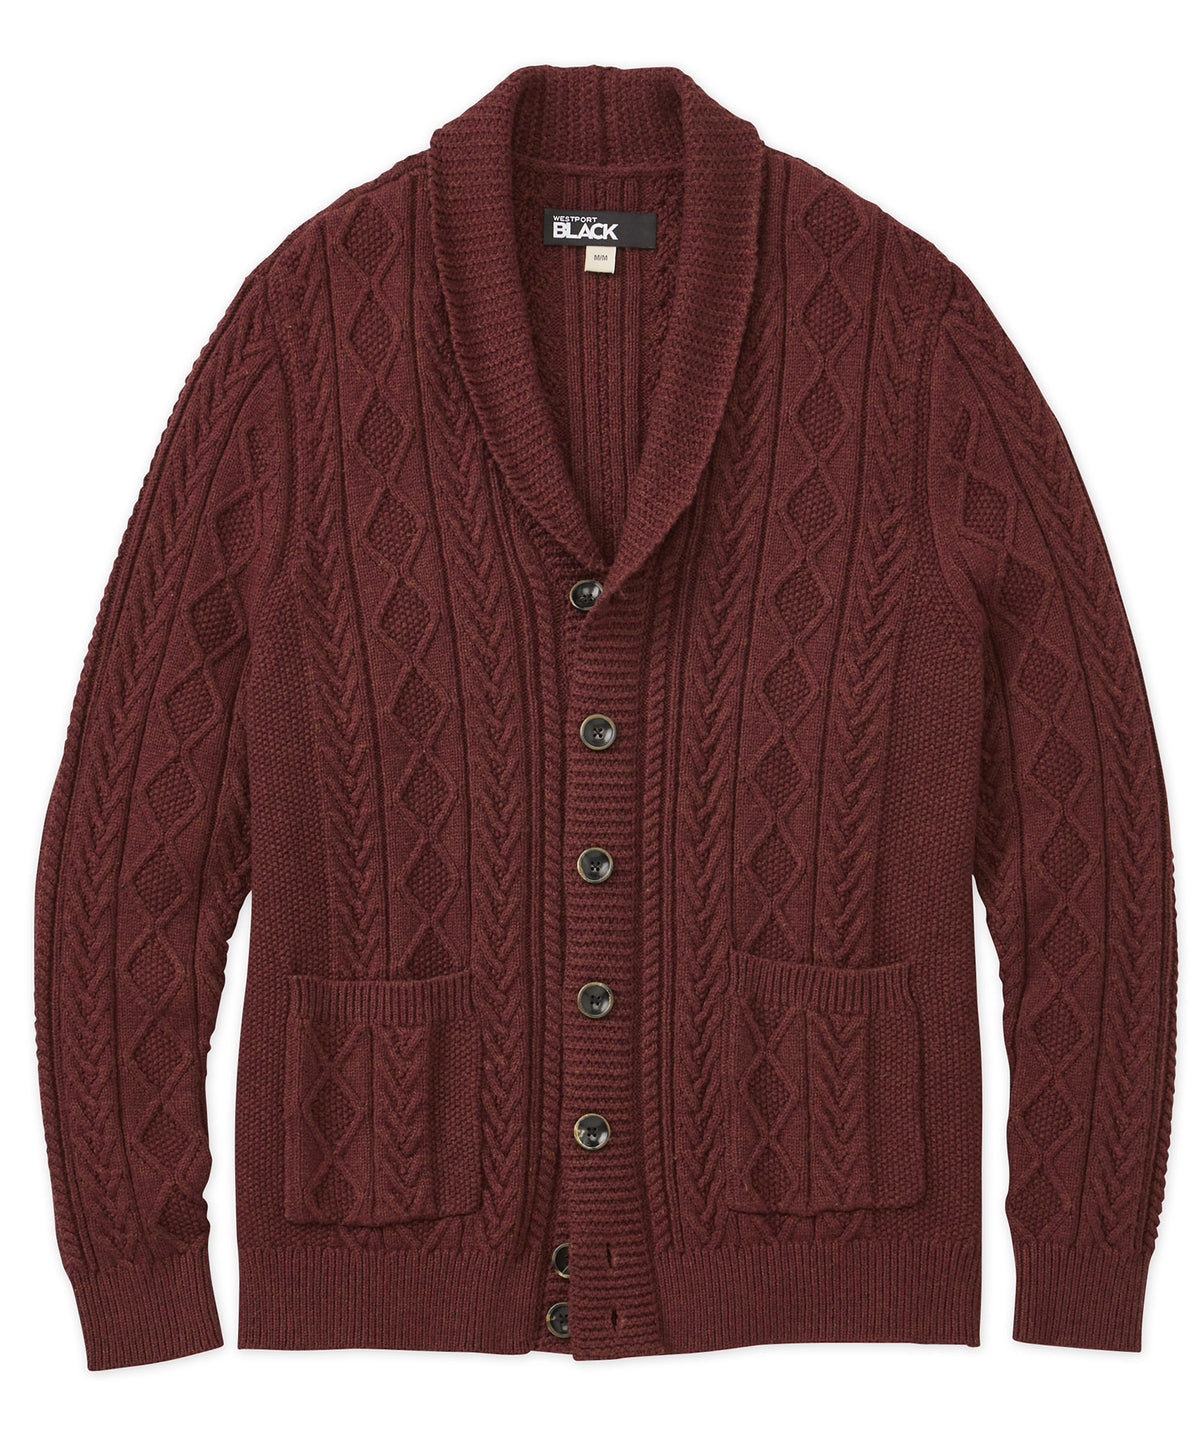 Westport Black Shawl Collar Cable Cardigan Sweater, Big & Tall